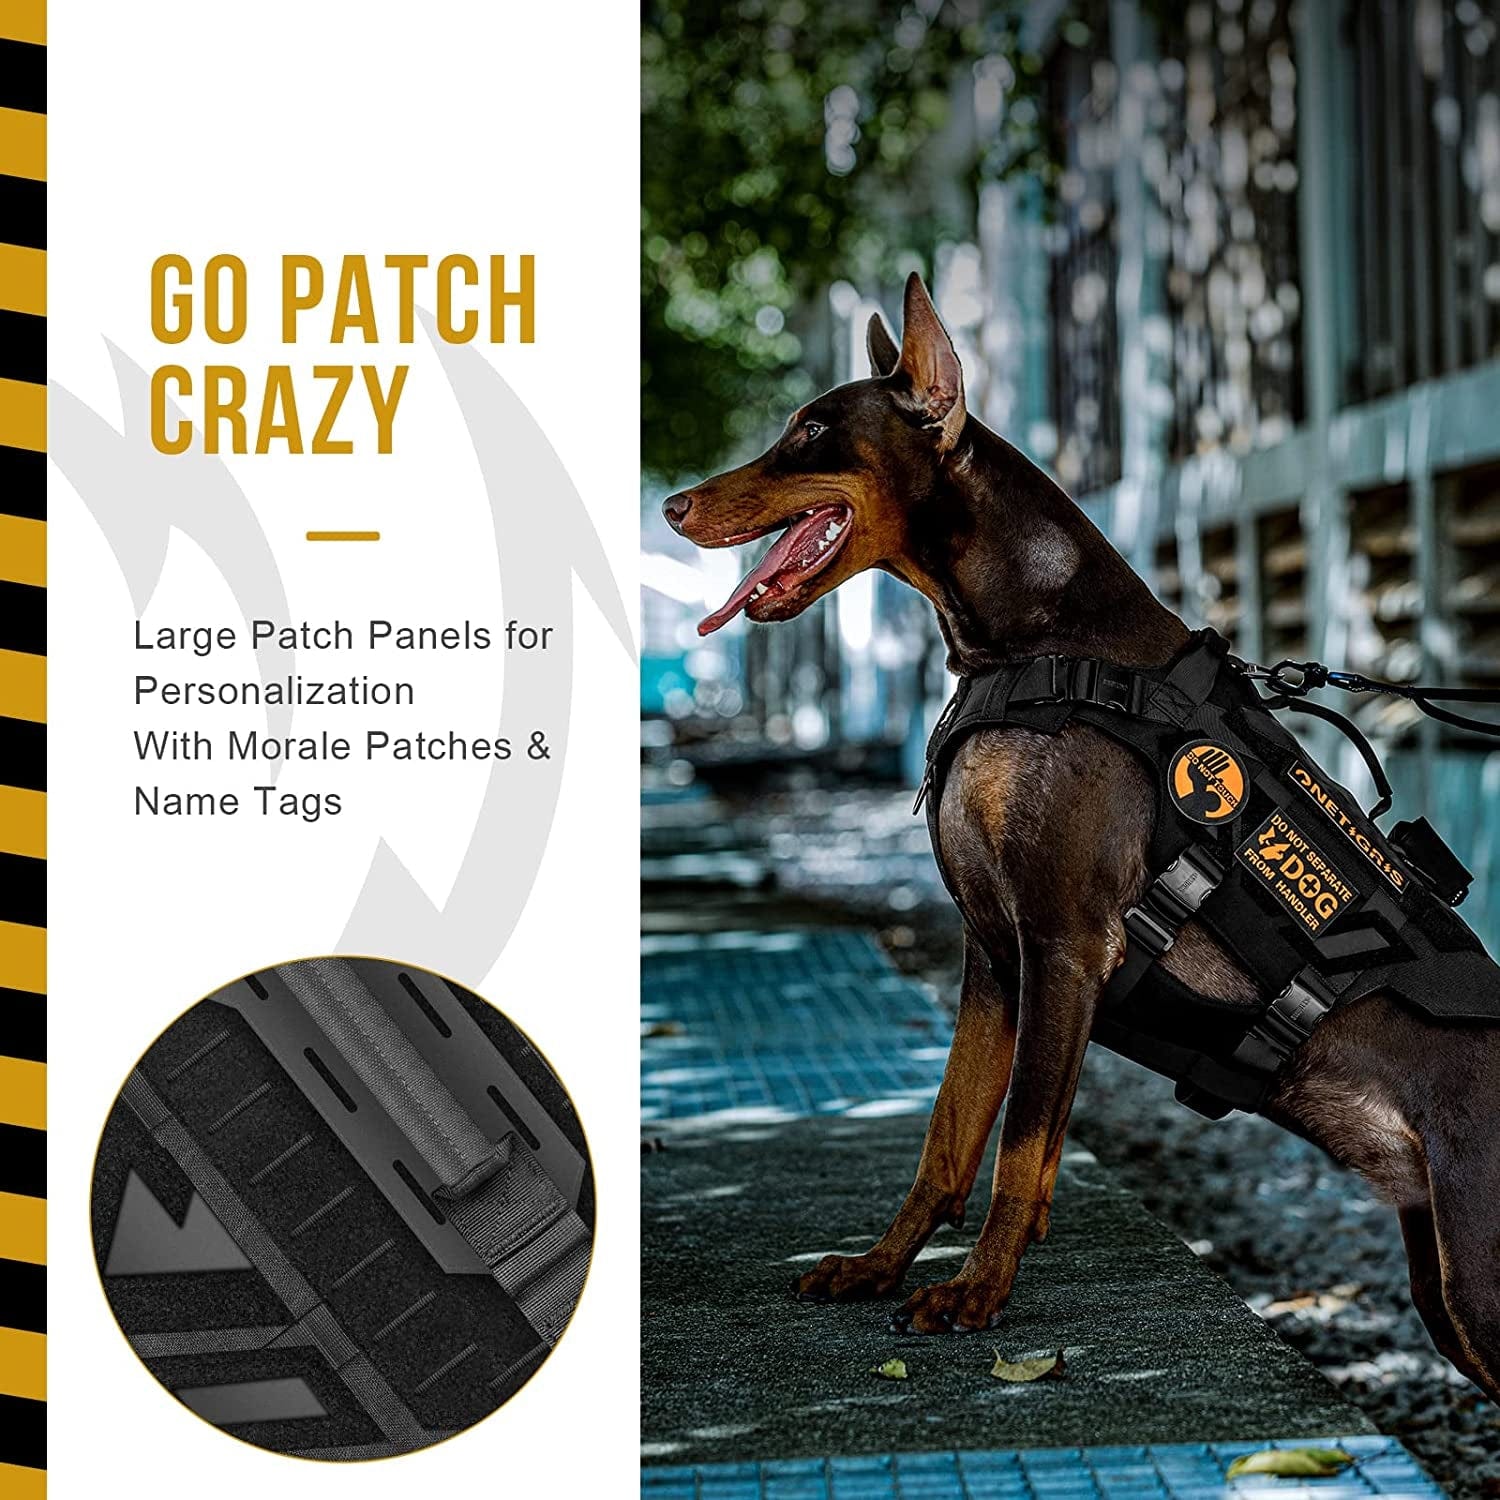 Tactical Dog Harness - Reflective Dog Vest - Army Dog Harness